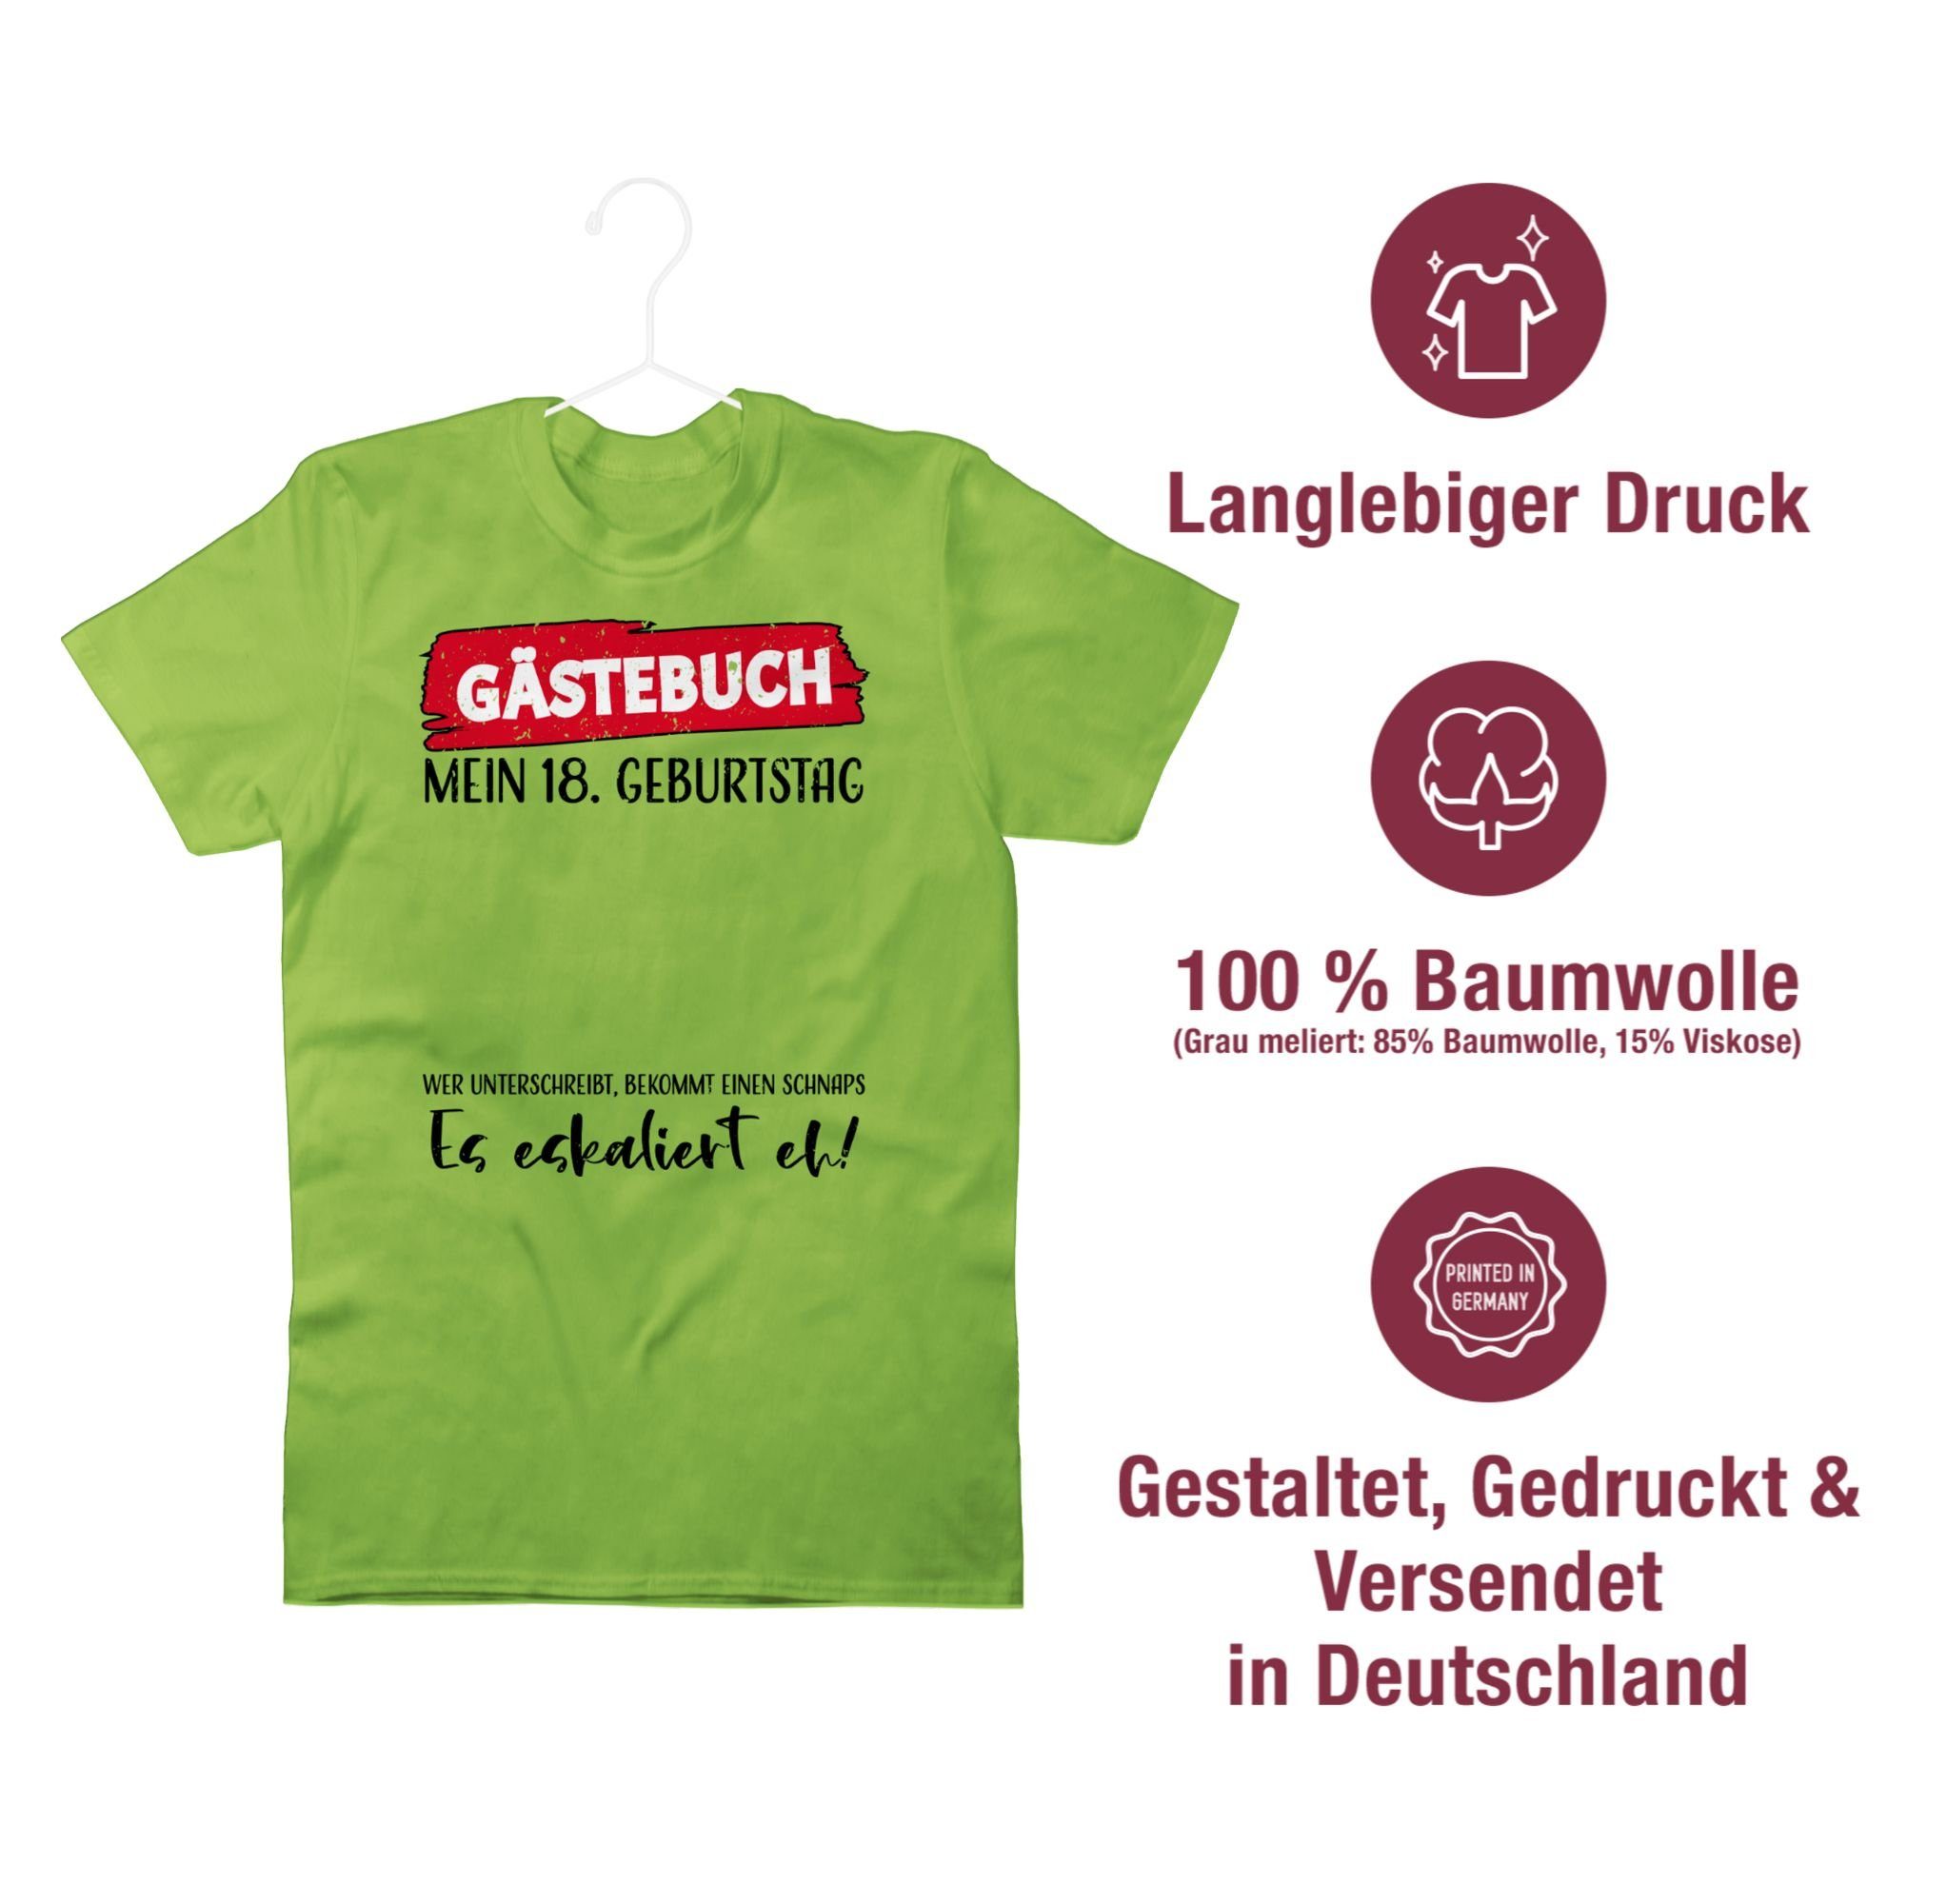 02 Geburtstag Hellgrün Geburtstag 18. Gästebuch T-Shirt Shirtracer 18.